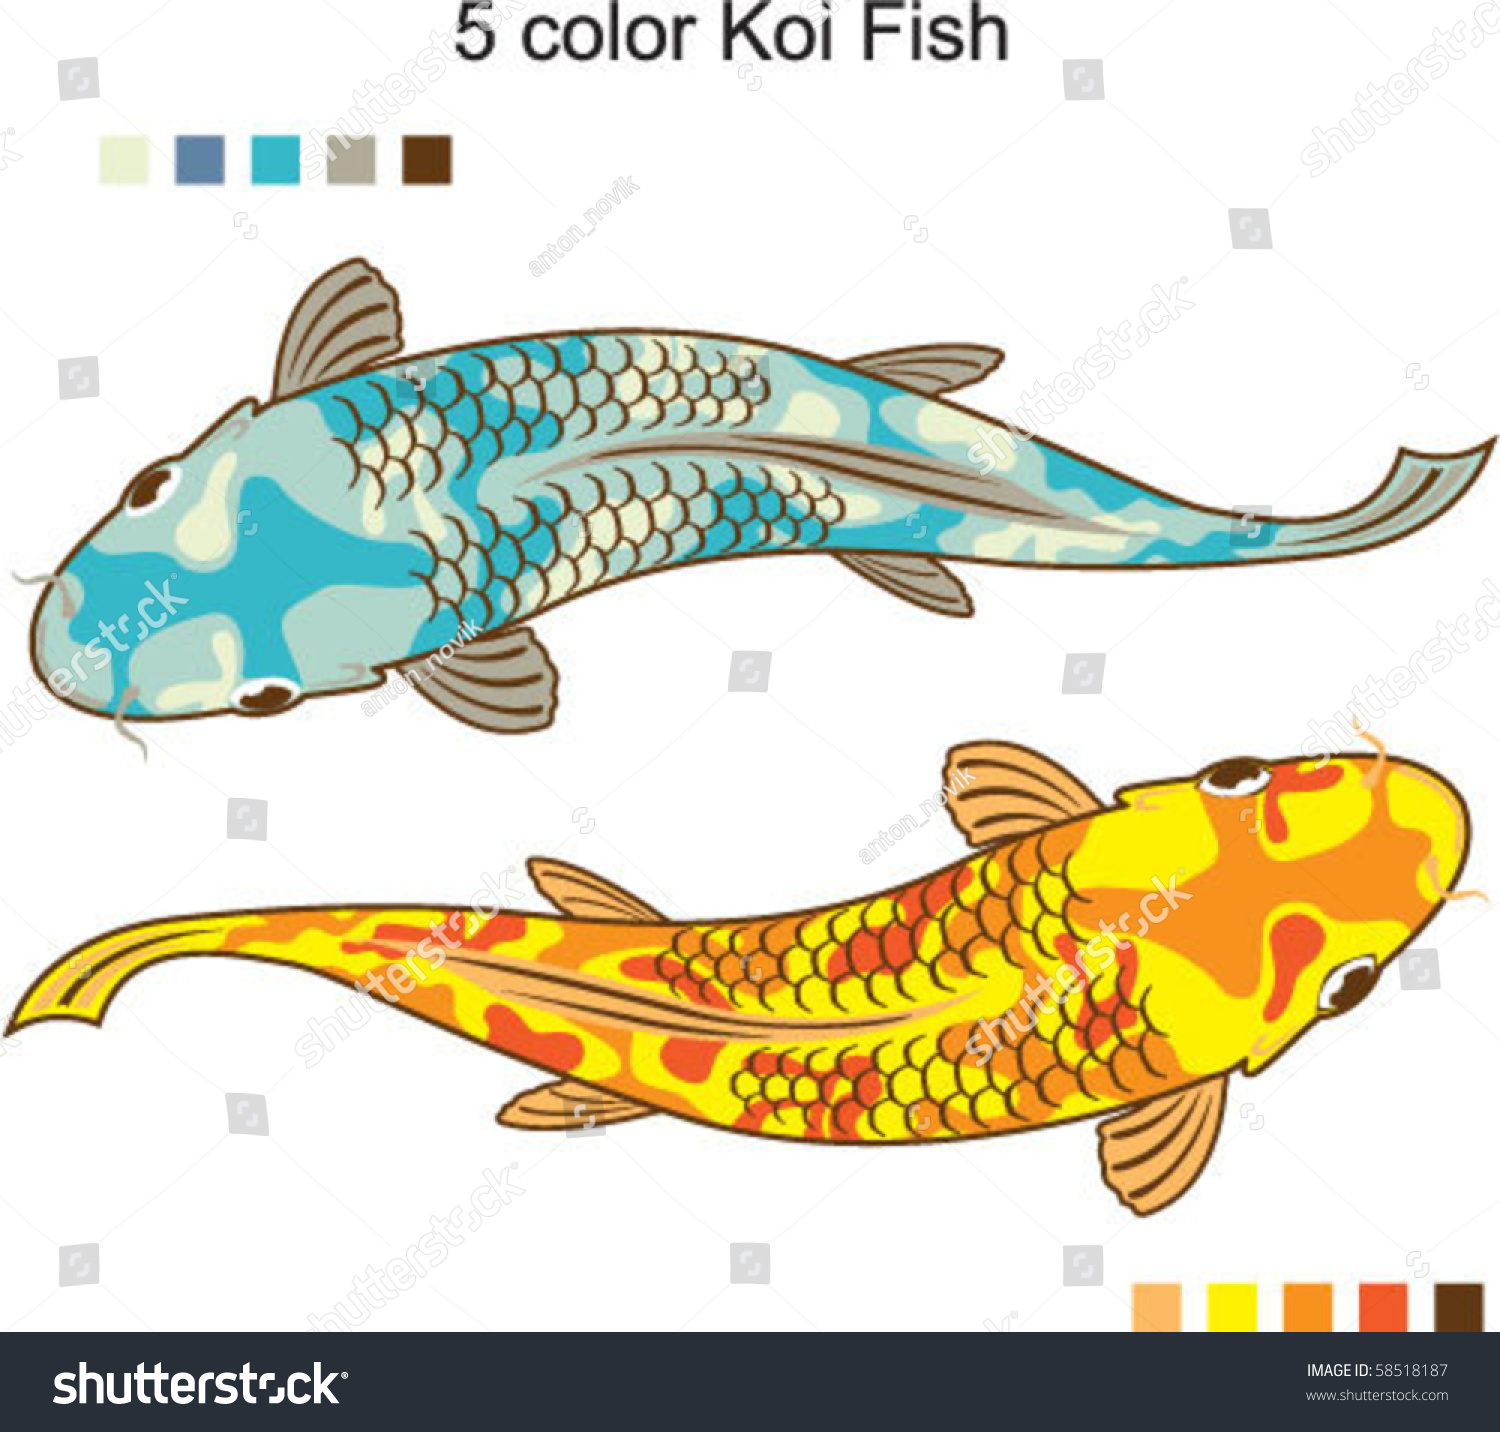 across the spectrum koi fish colors koi, 4 color koi fish vector ...